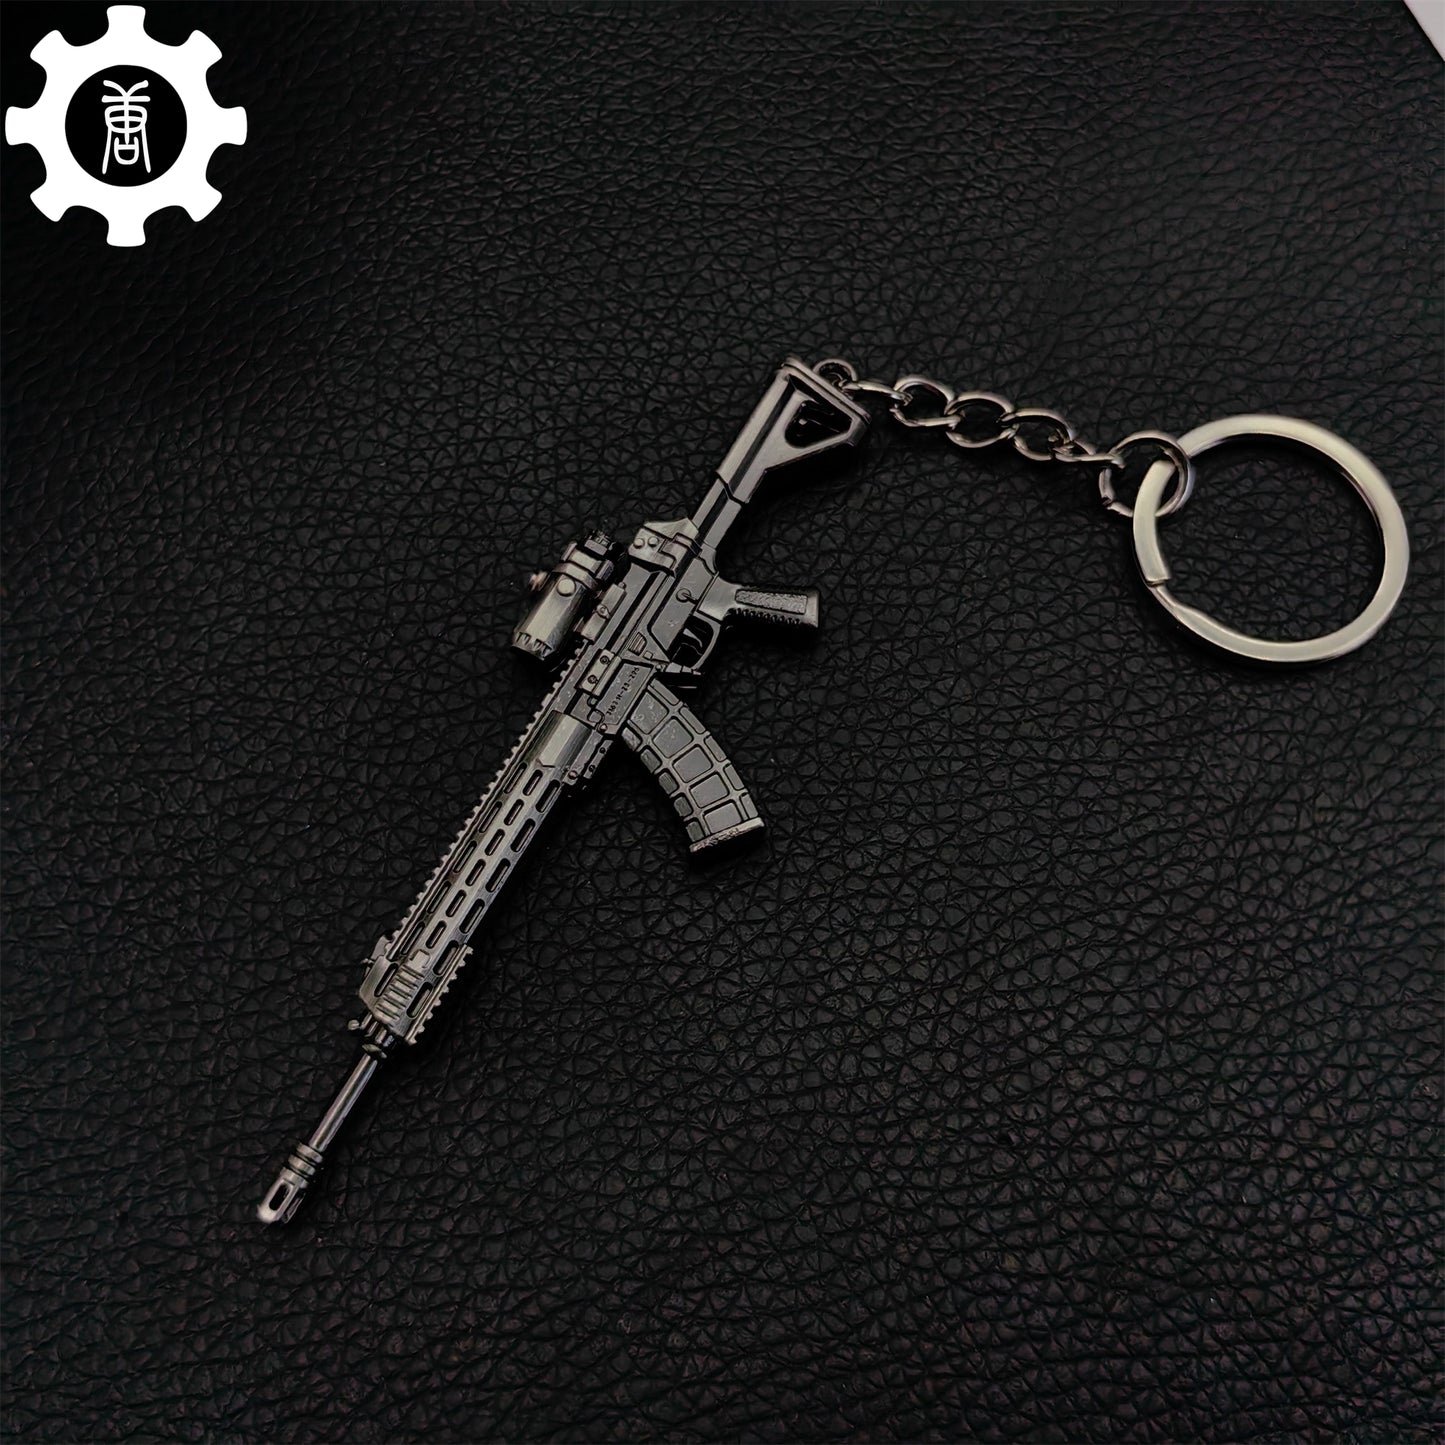 Tiny QBZ-191 Automatic Rifle Metal Keychain